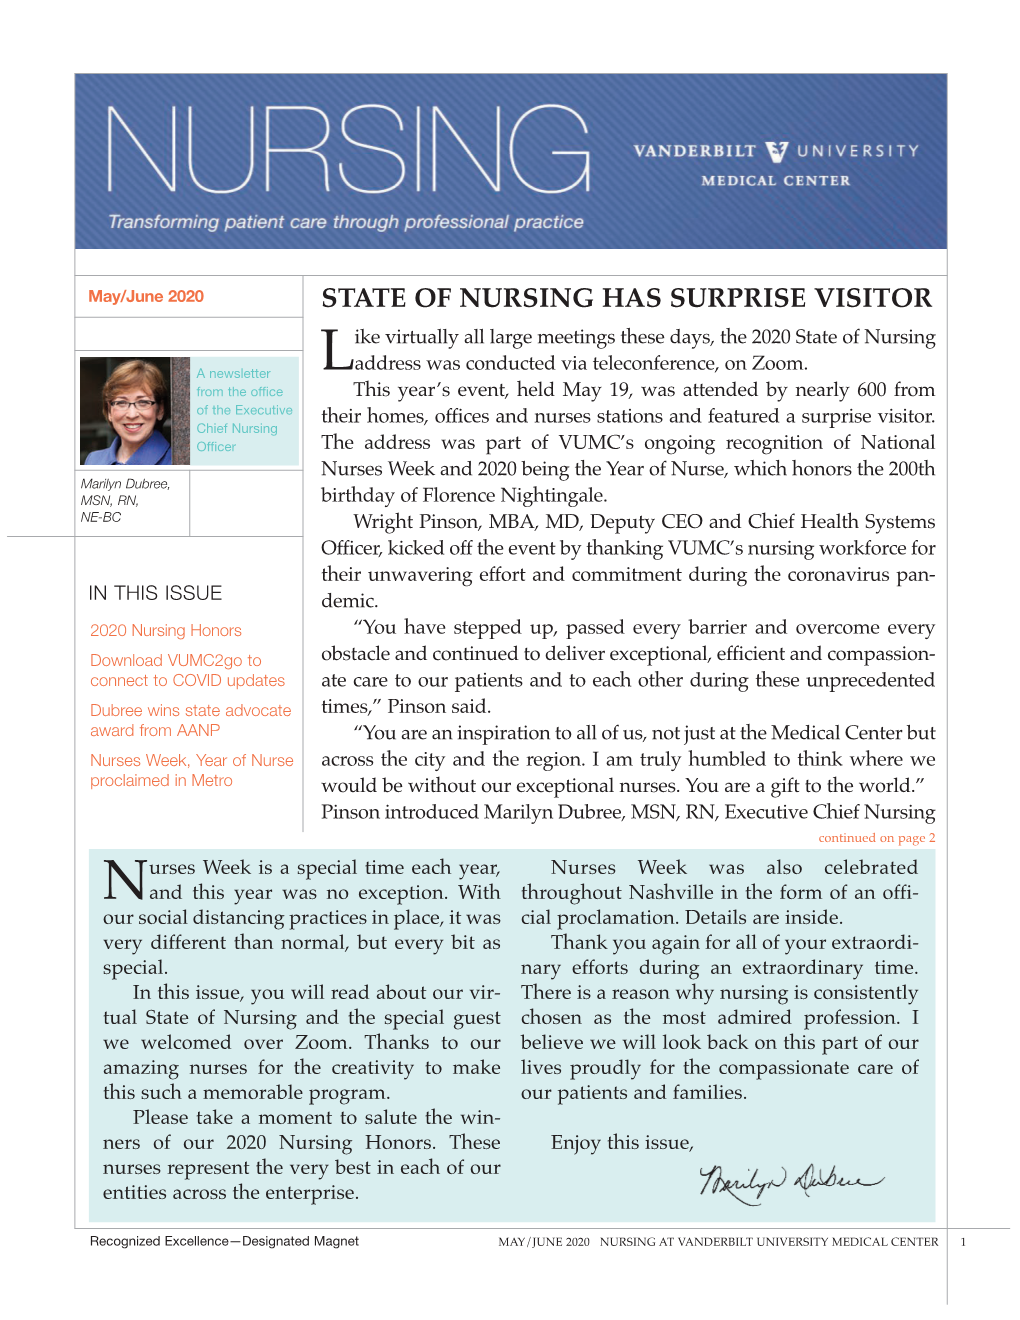 Access This Edition of VUMC Nursing News